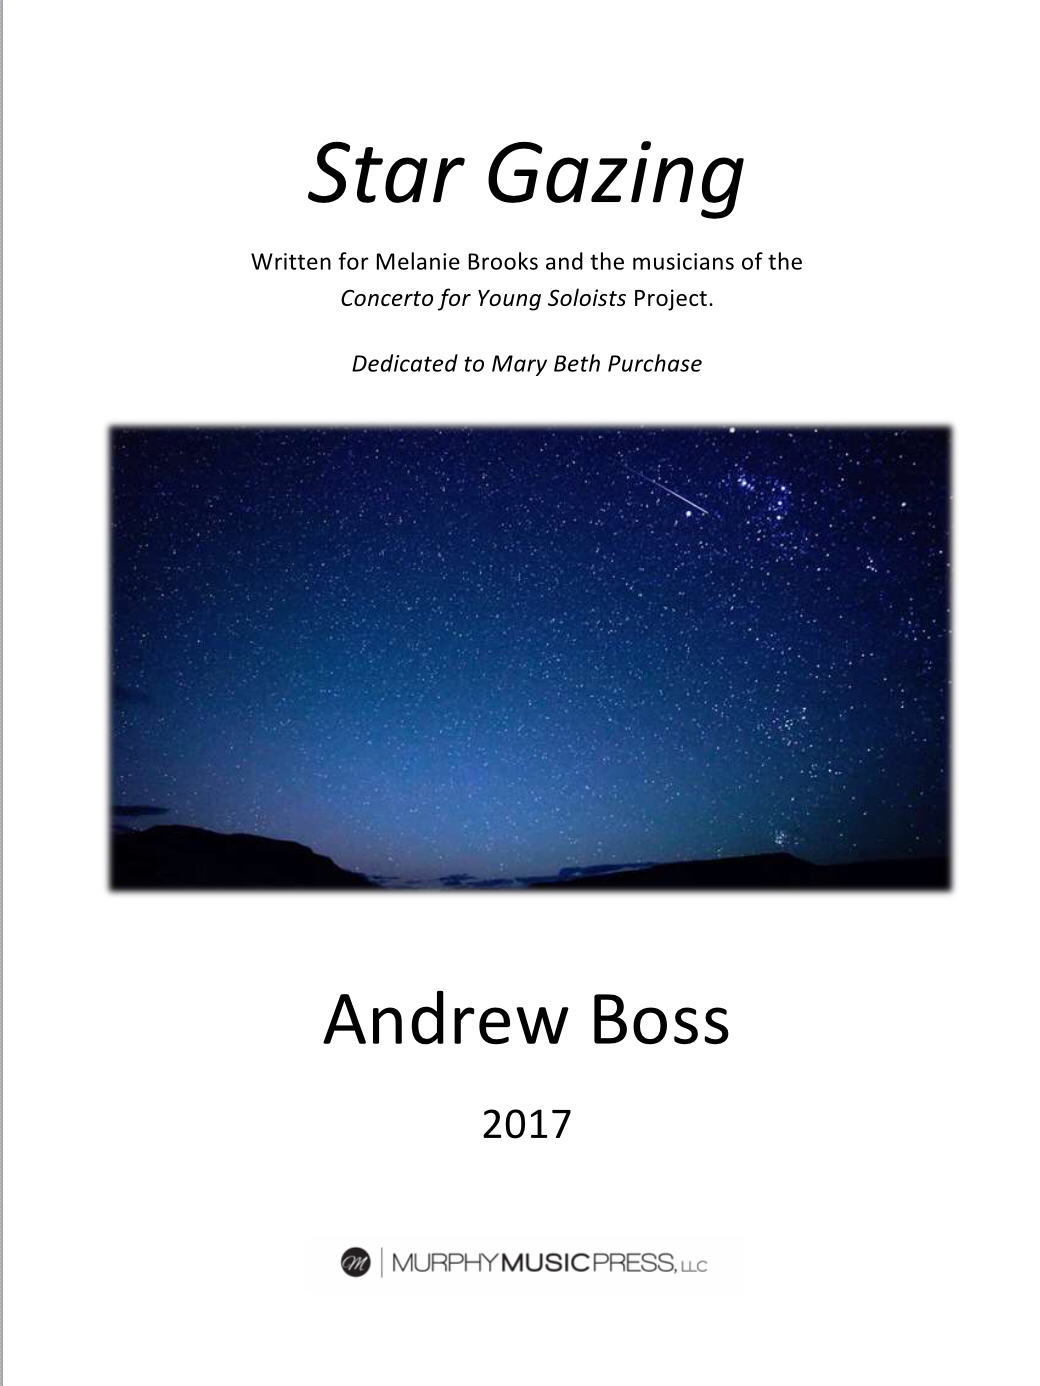 Stargazing by Andrew Boss